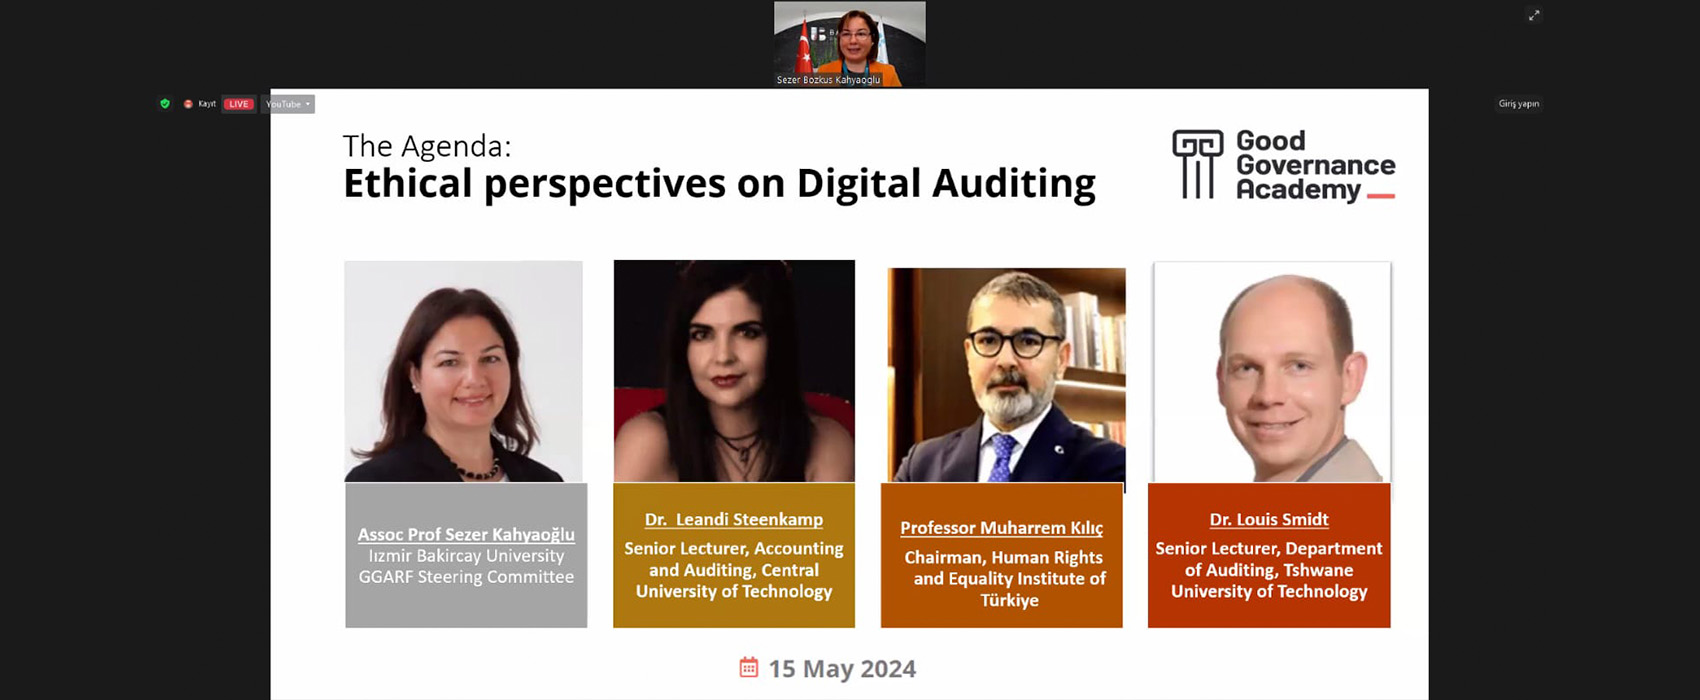 Chairman Prof. Dr. Muharrem KILIÇ Participated in the “Ethical Perspectives on Digital Auditing” Online Webinar as Panelist